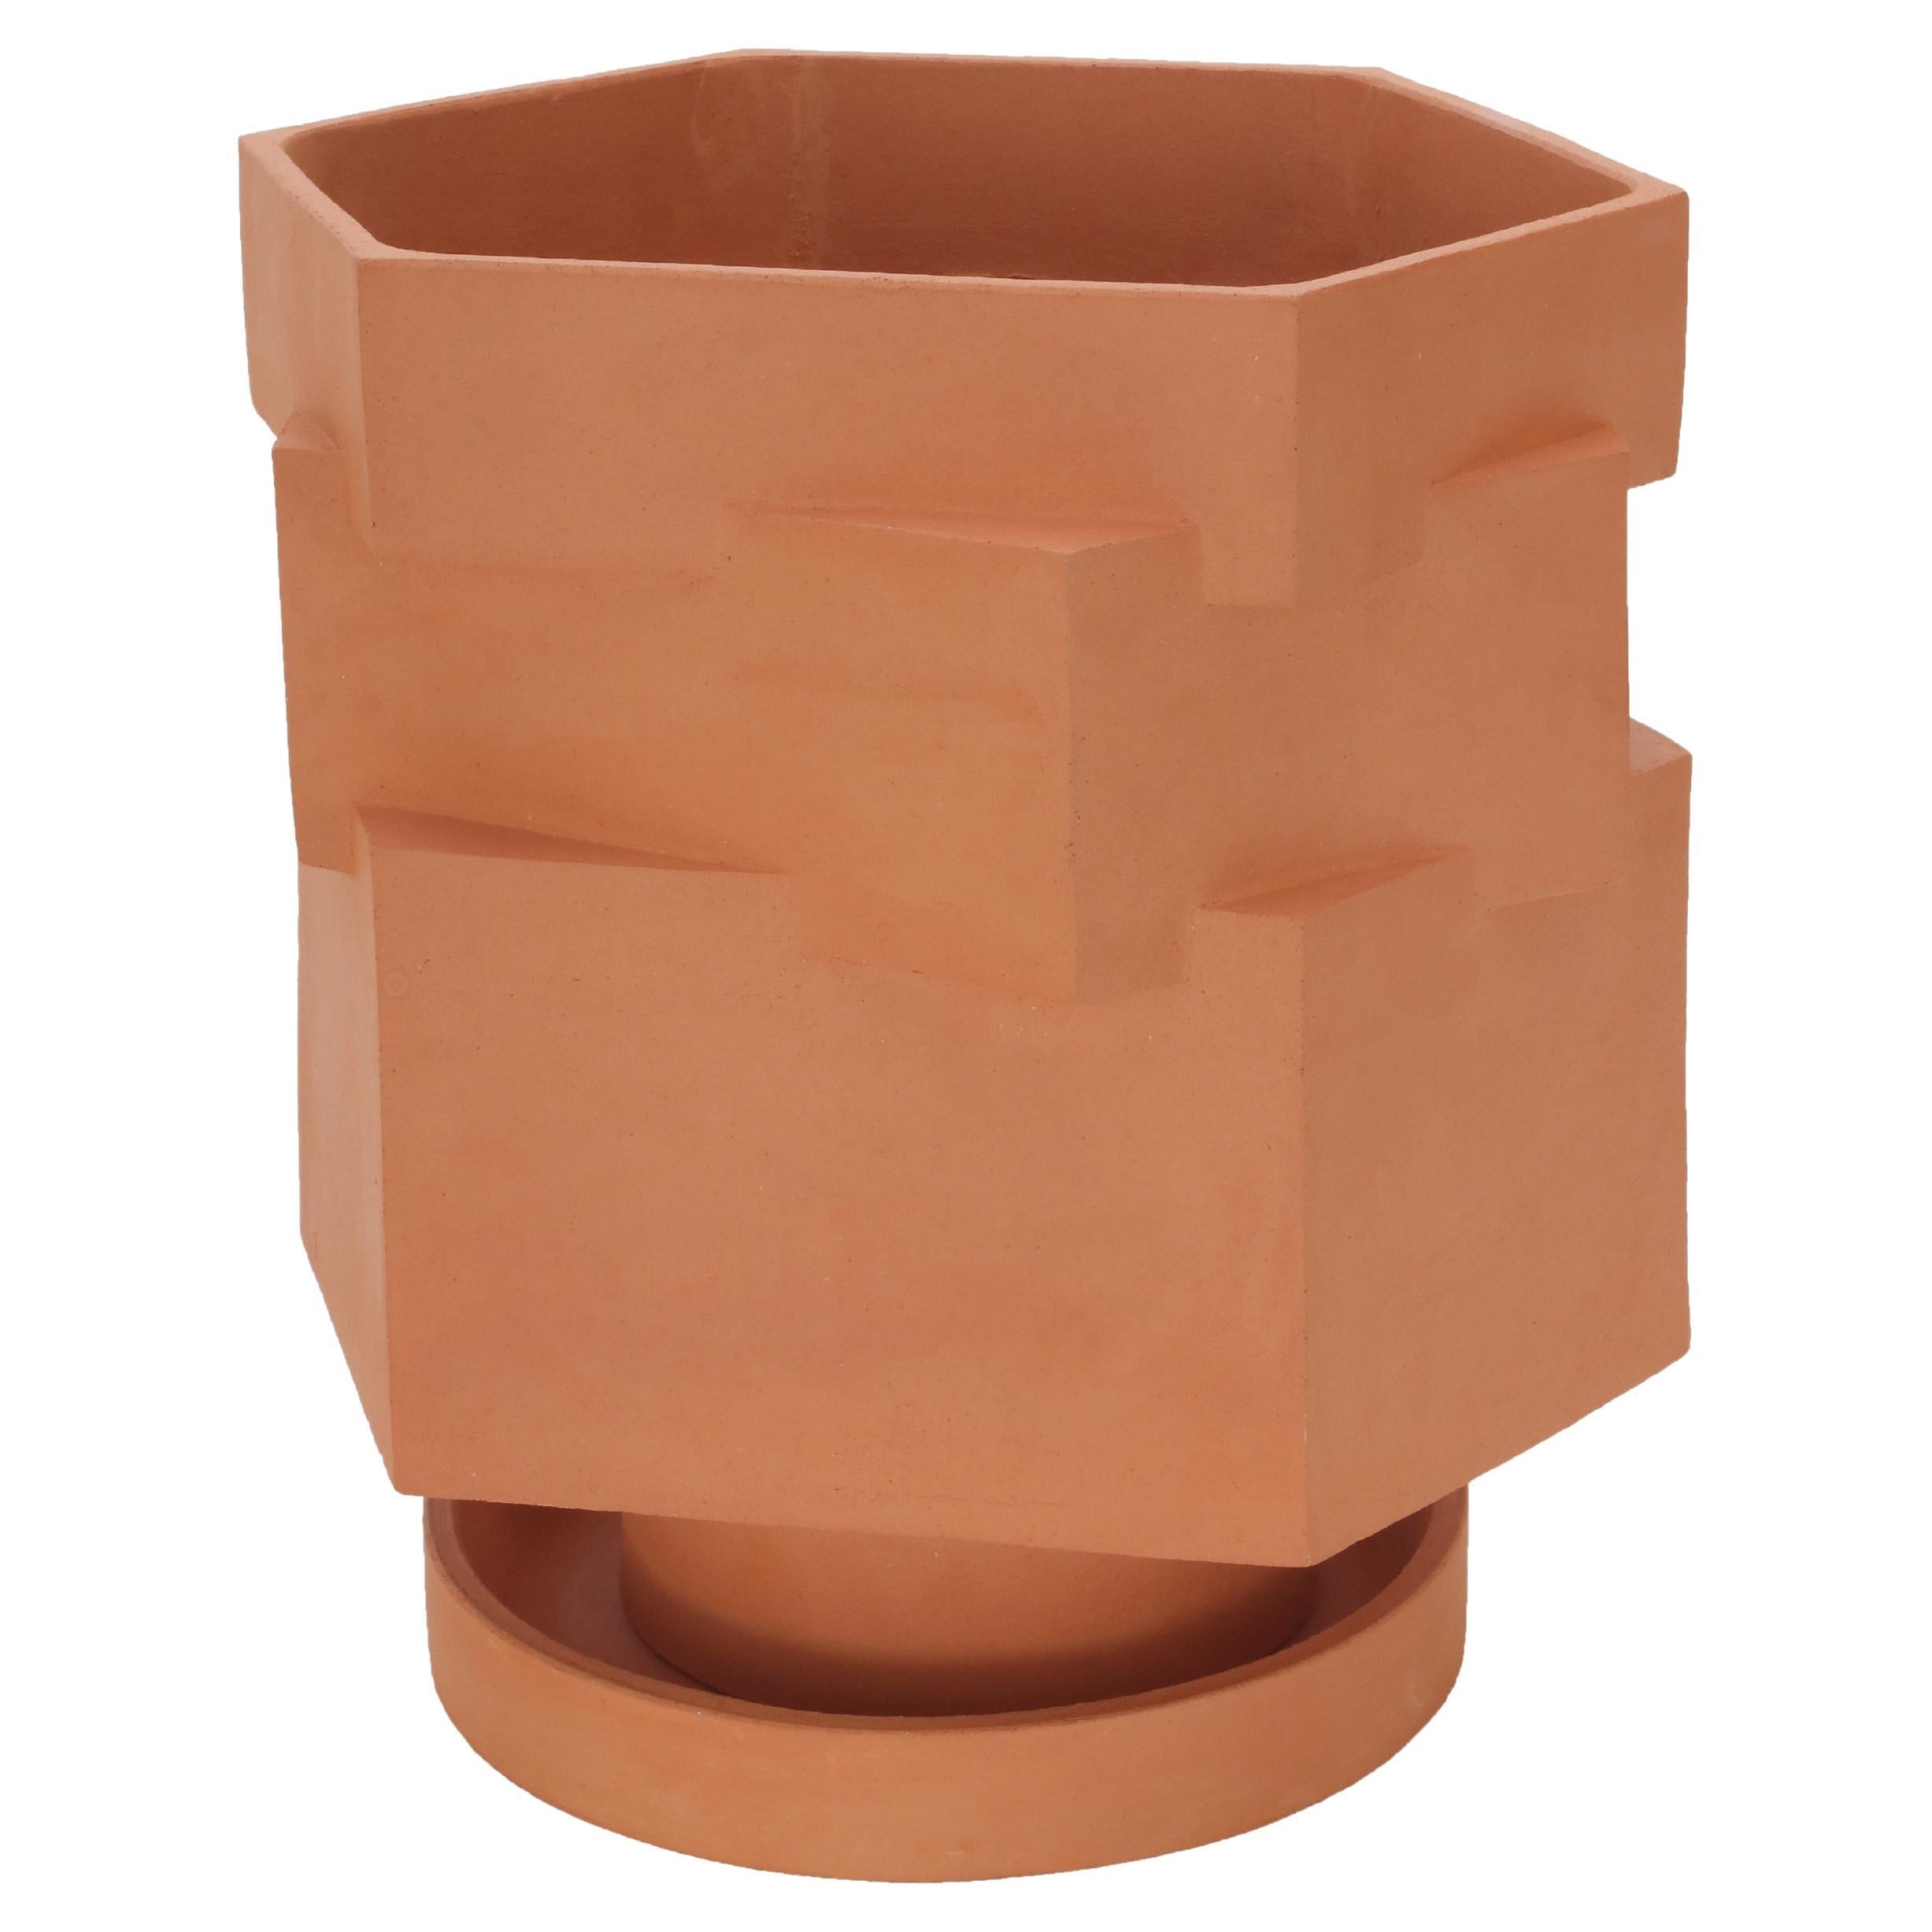 Ceramic Hex Planter in Raw Terracotta by BZIPPY For Sale